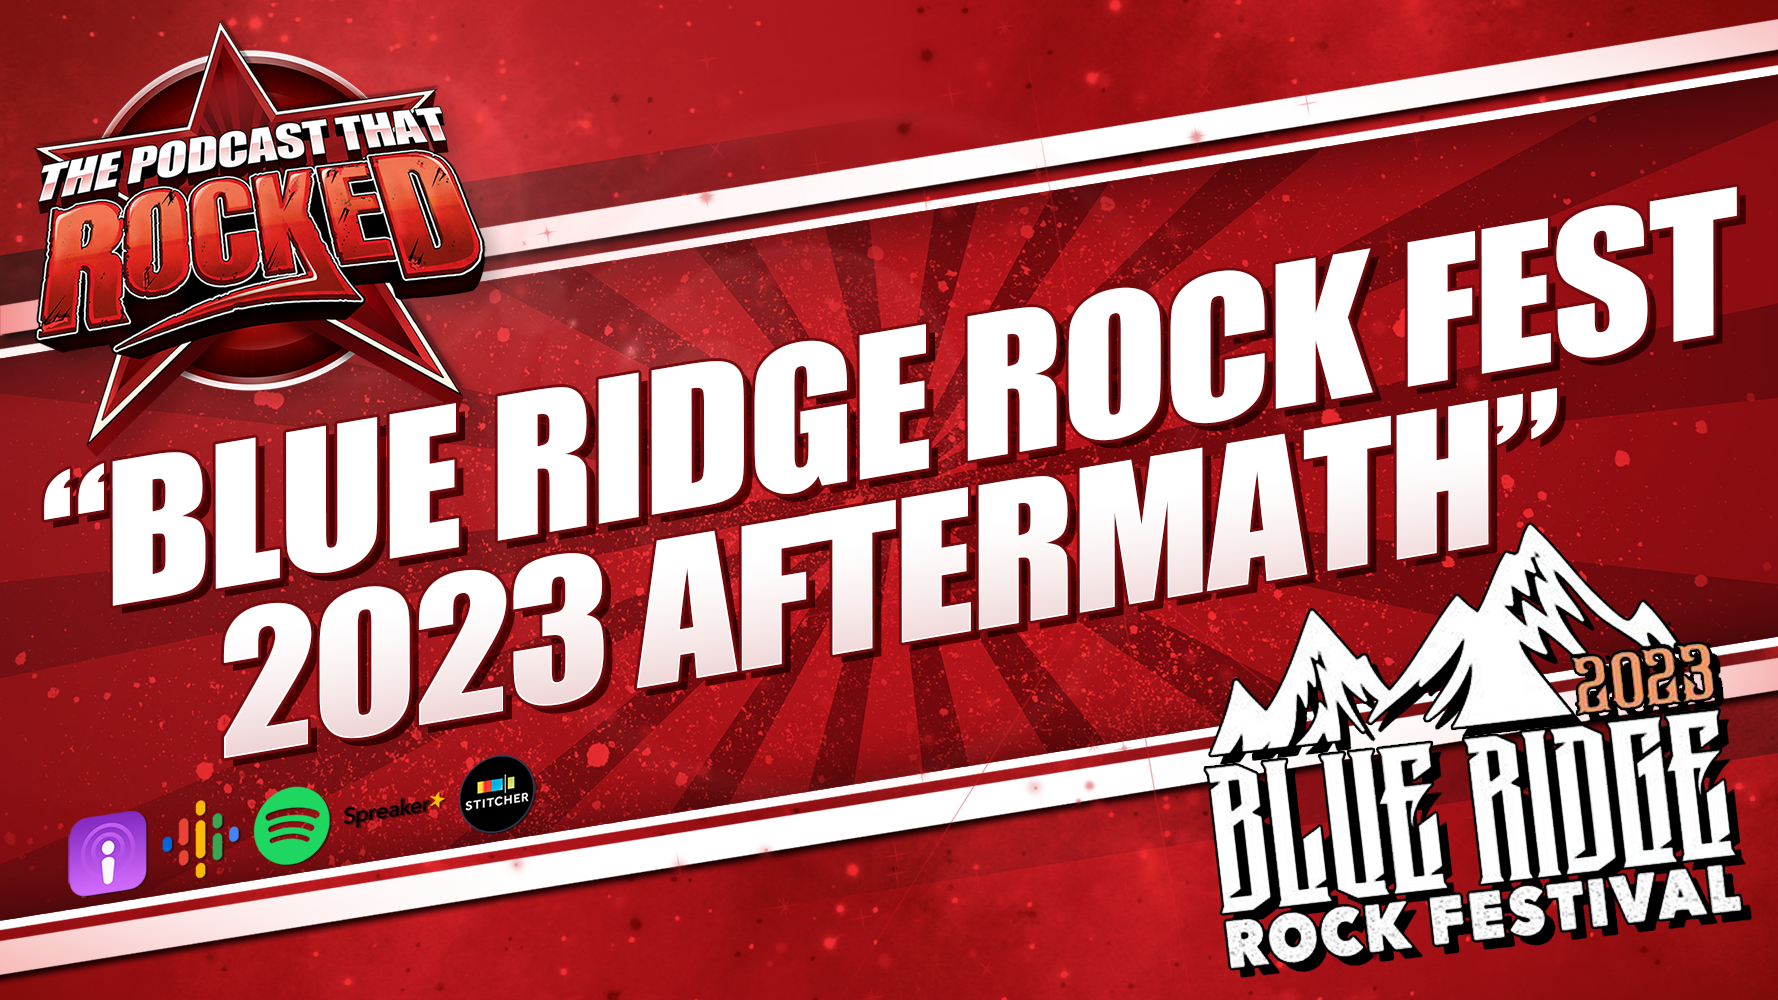 The Podcast That Rocked – Blue Ridge Rock Fest 2023